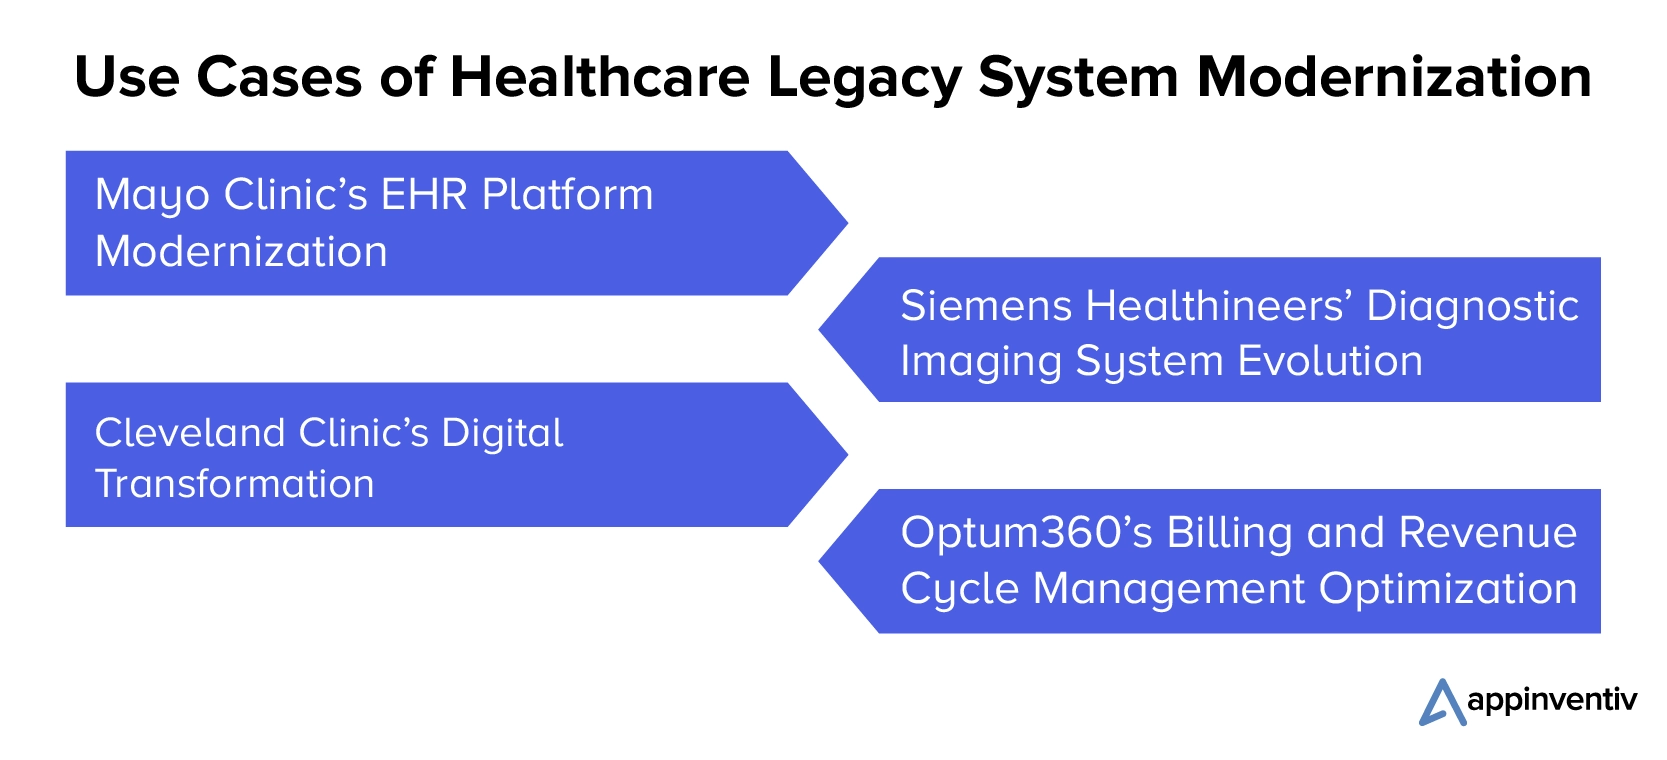 Use Cases of Healthcare Legacy System Modernization